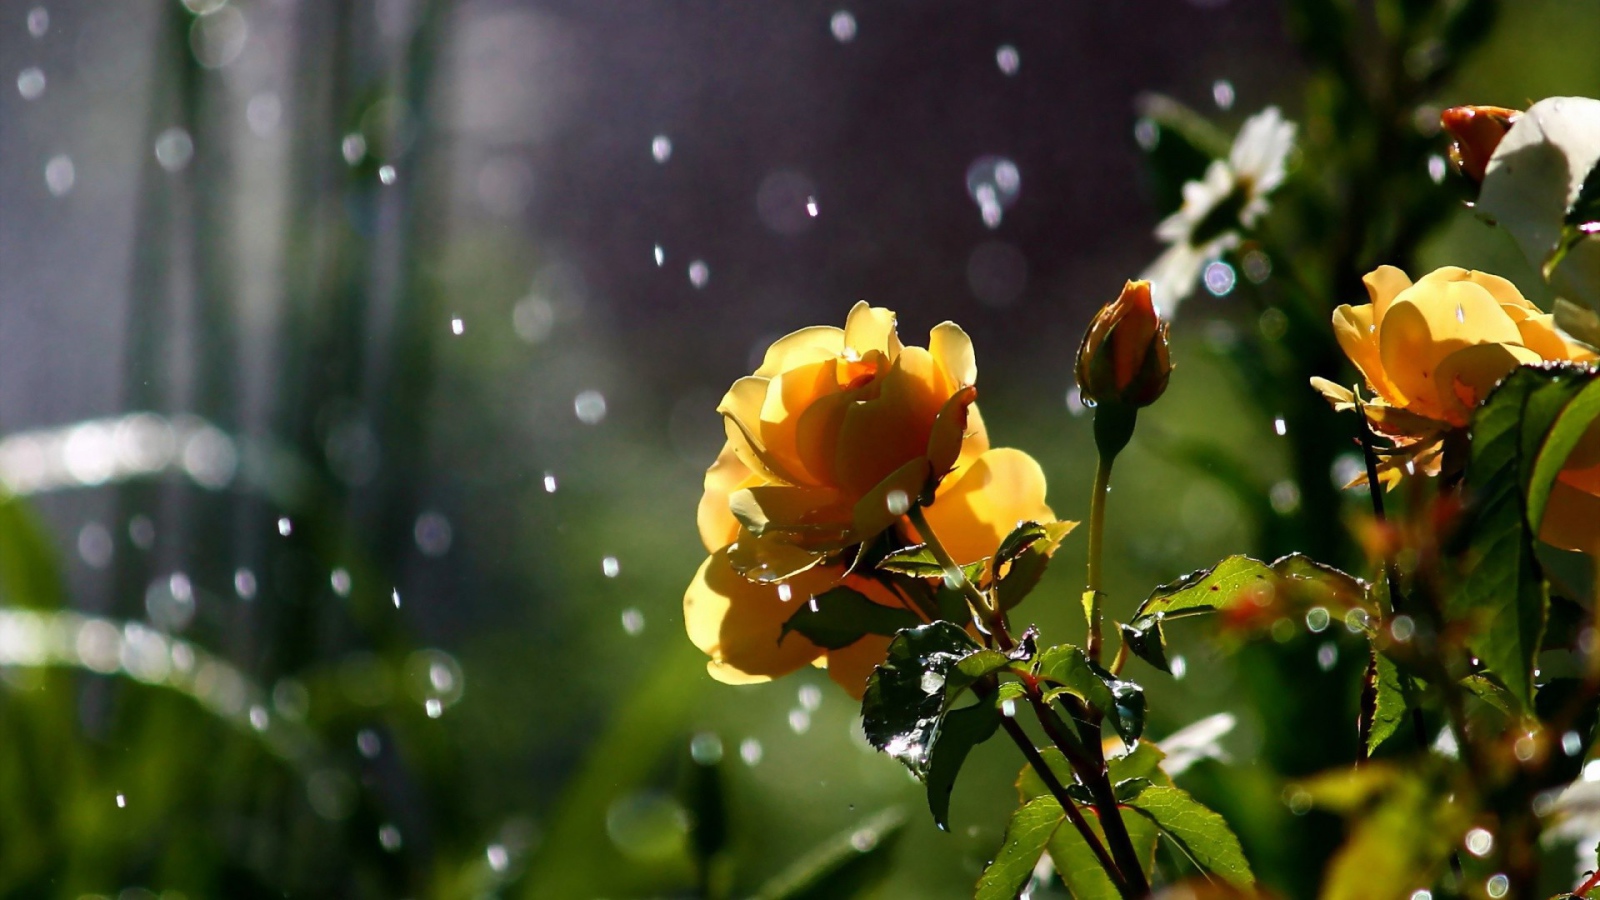 Yellow roses in the rain